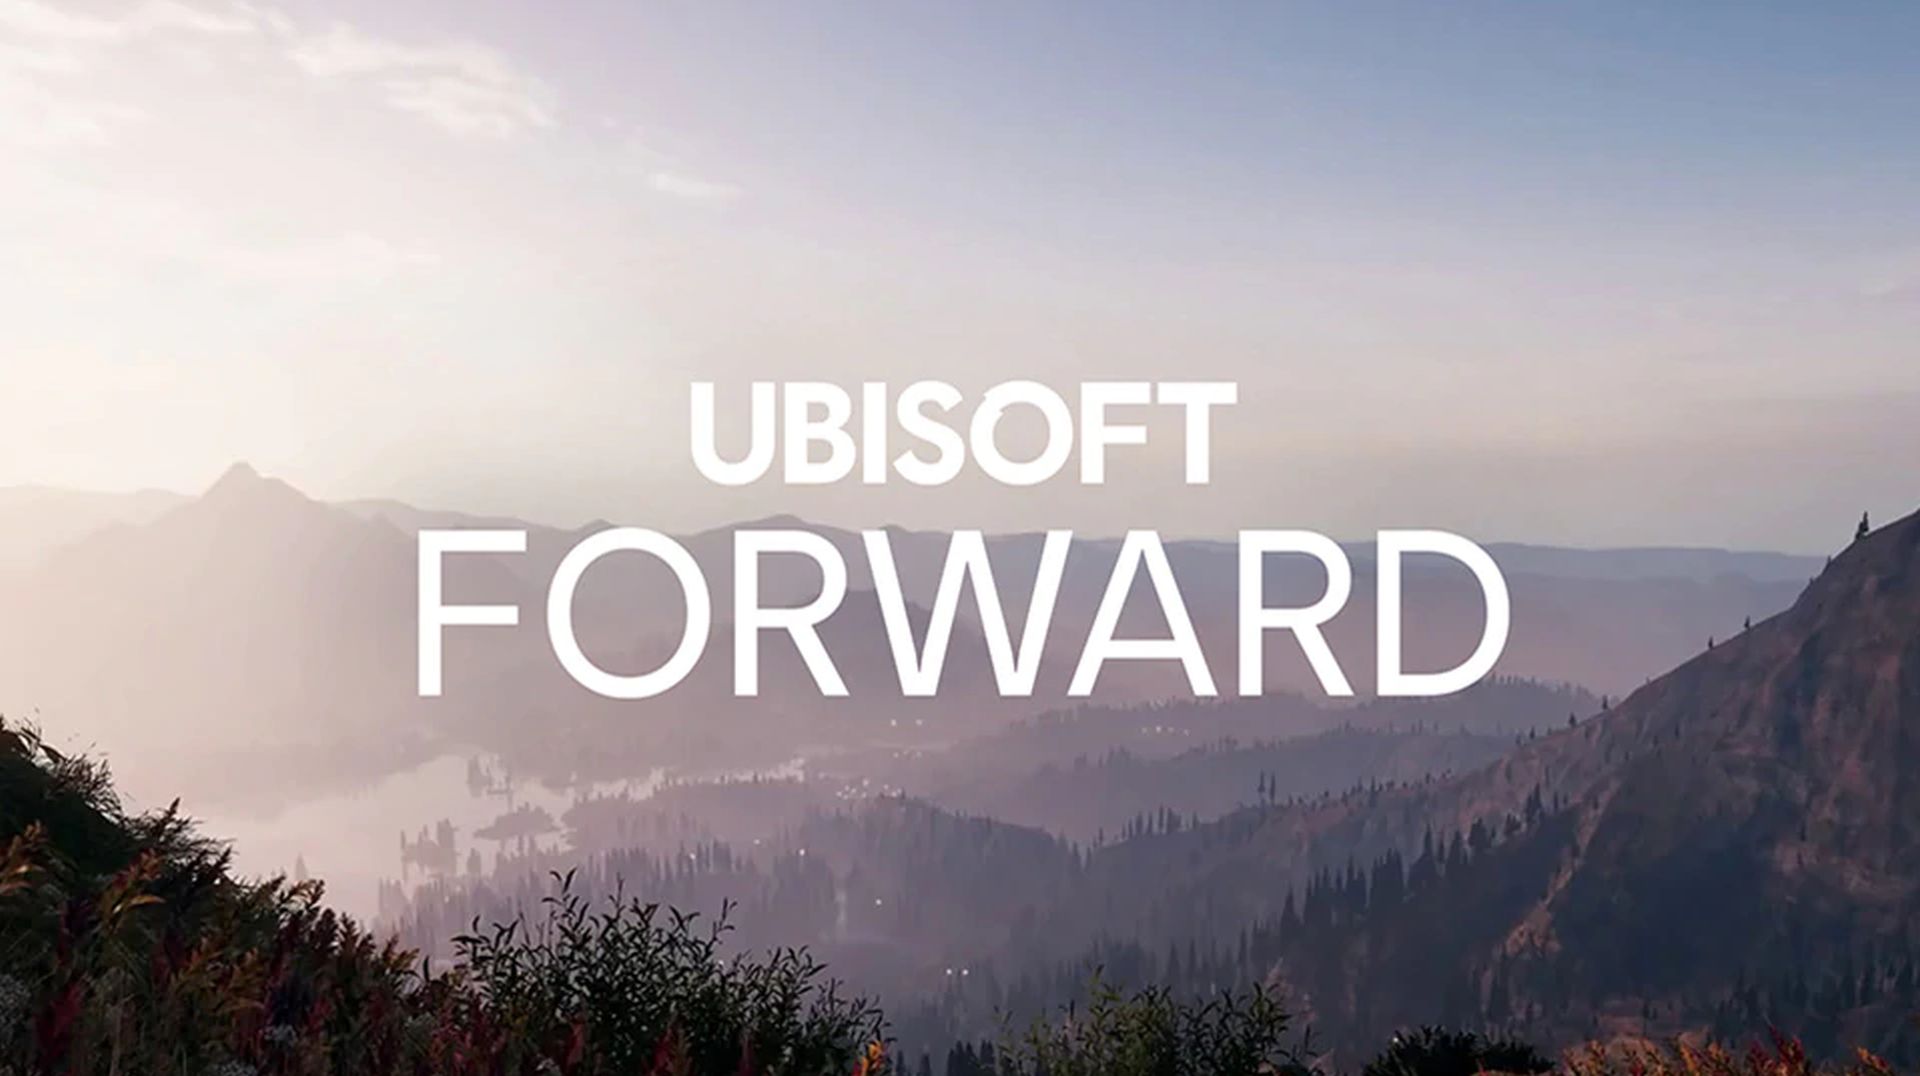 Ubisoft Forward Confirmed For September 10th